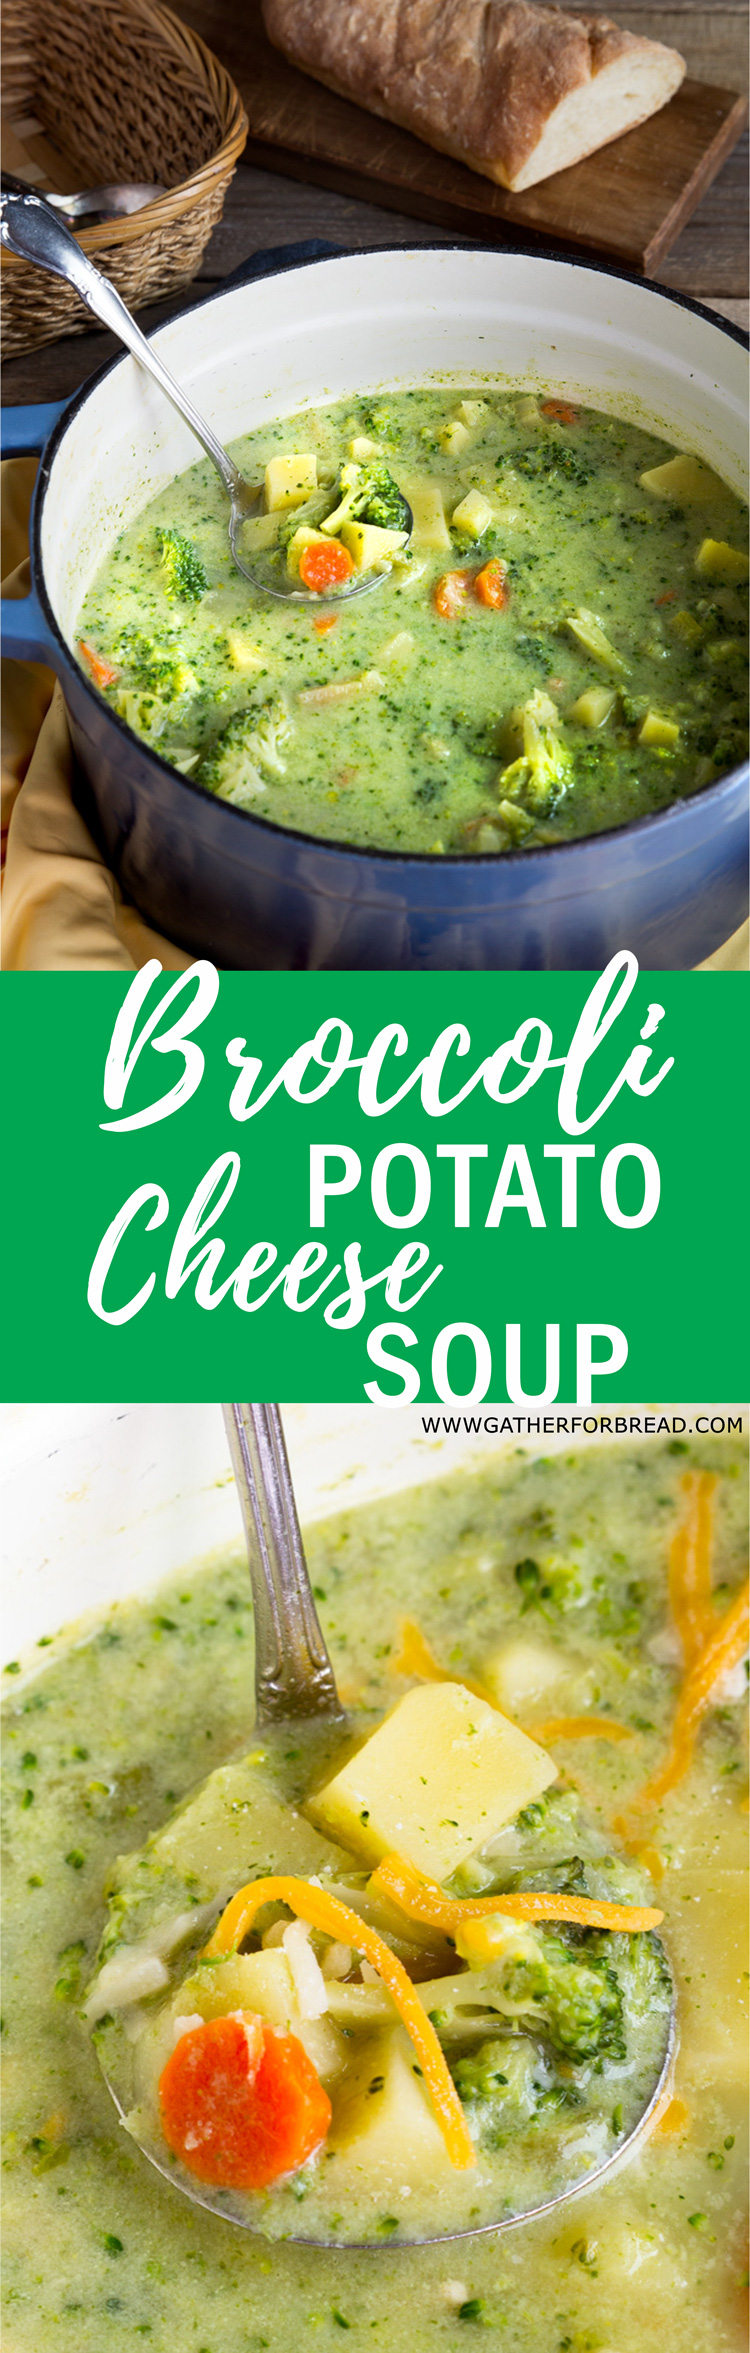 Broccoli Potato Cheese Soup - Gather for Bread